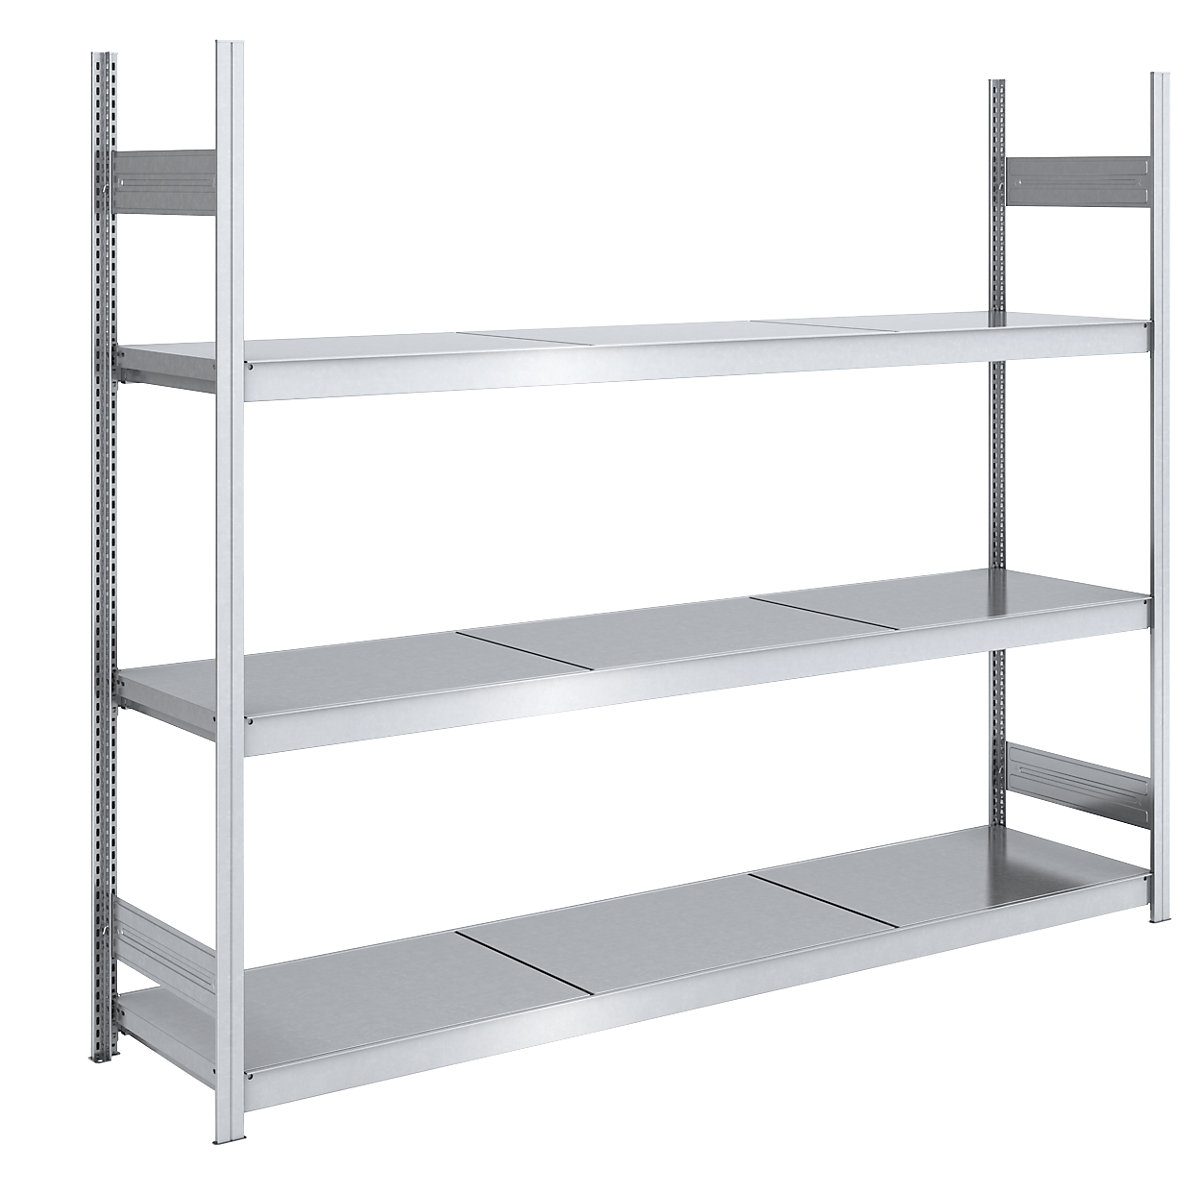 Wide span boltless shelving unit, zinc plated – hofe, shelf WxD 2250 x 600 mm, standard shelf unit, 3 steel shelves, height 2000 mm